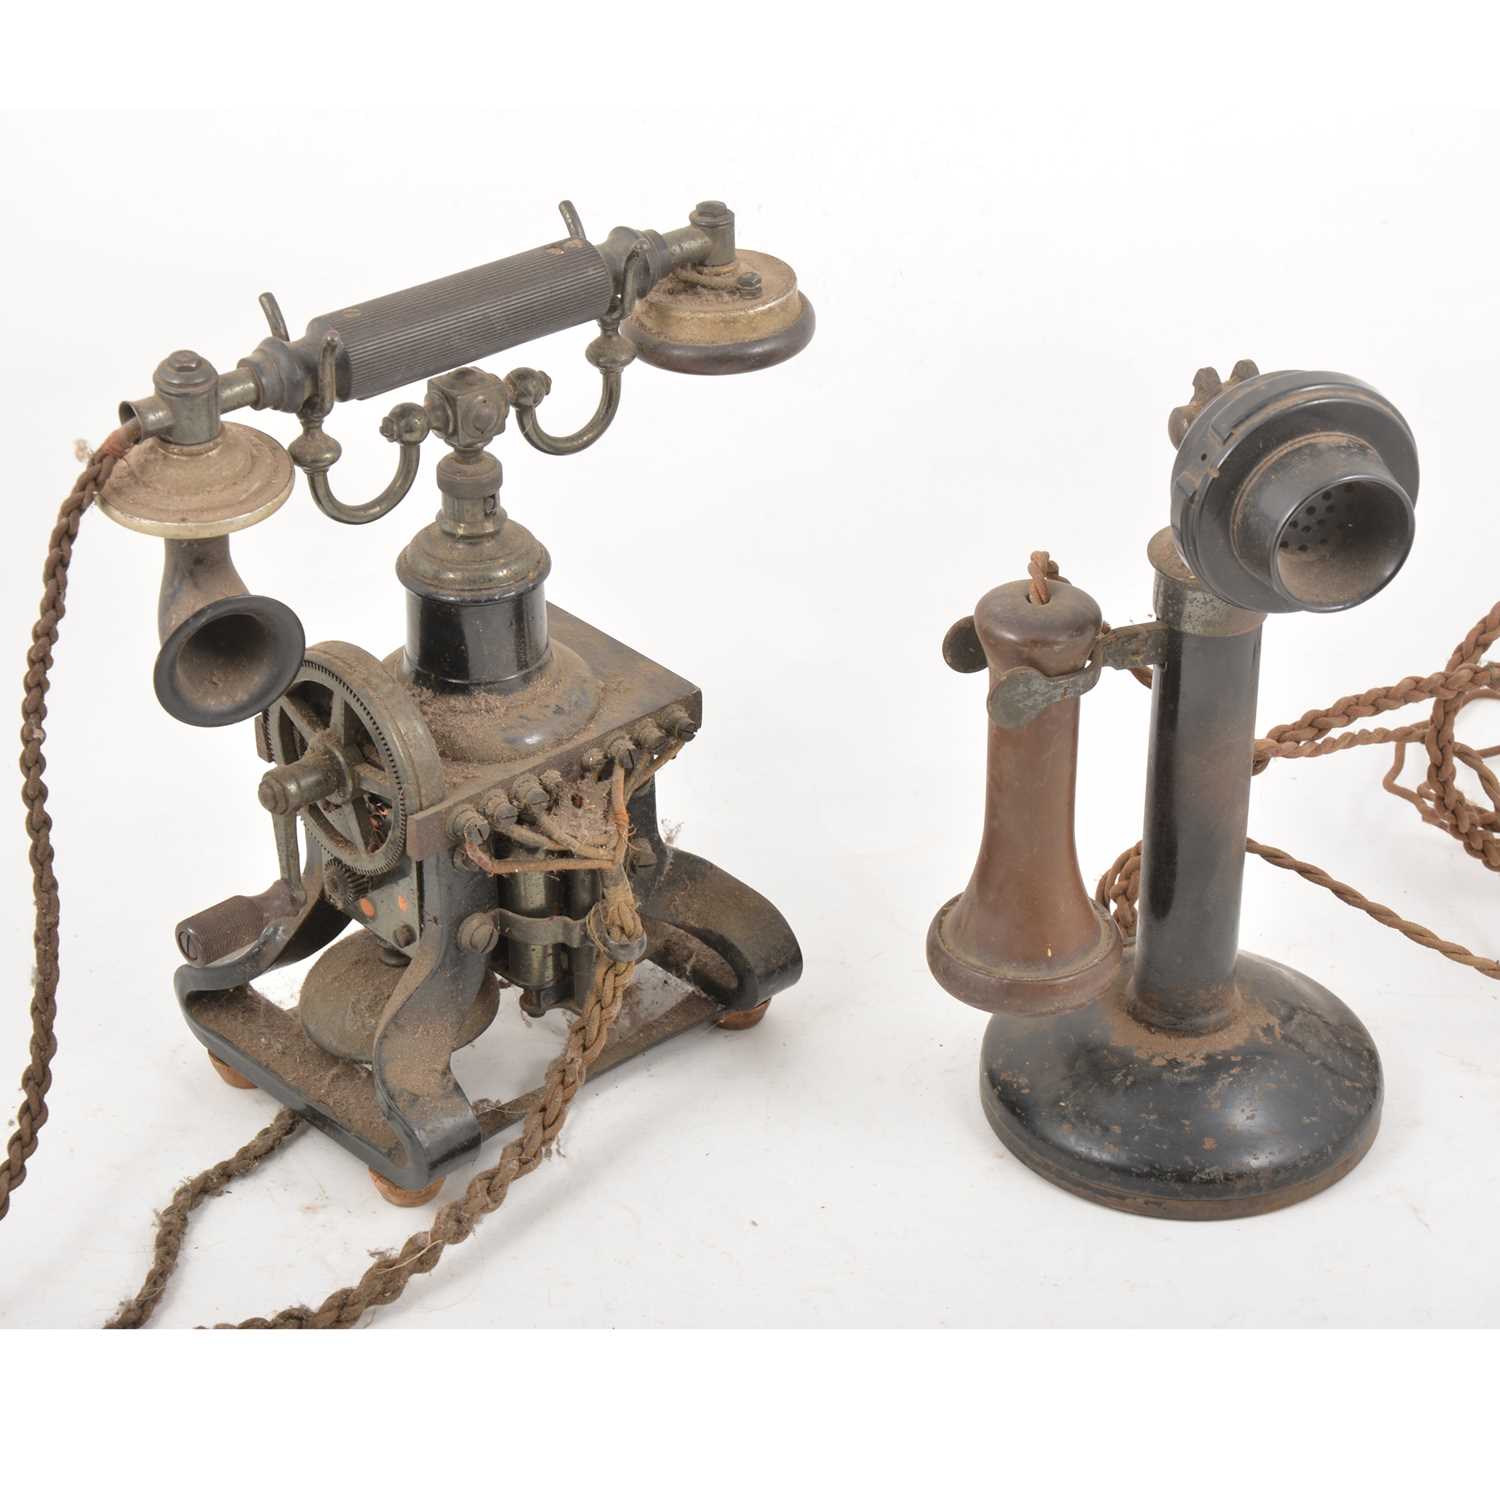 Lot 107 - Four vintage GPO telephones, including an Ericsson 'Skeleton Telephone'.